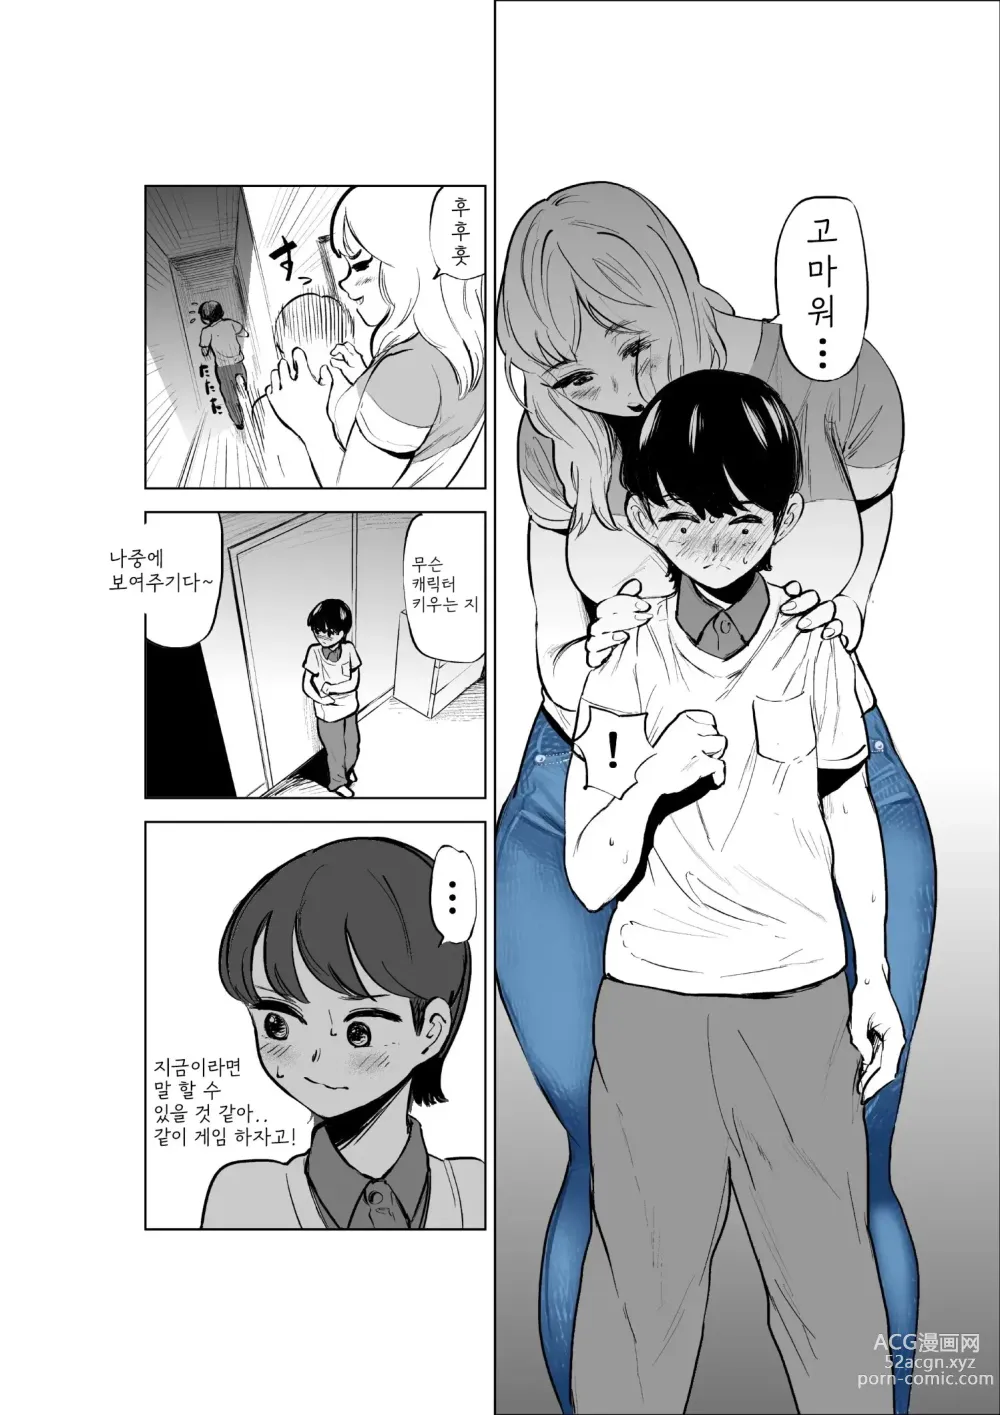 Page 6 of doujinshi Onee-chan to Kyori o Chijimeru Hanashi